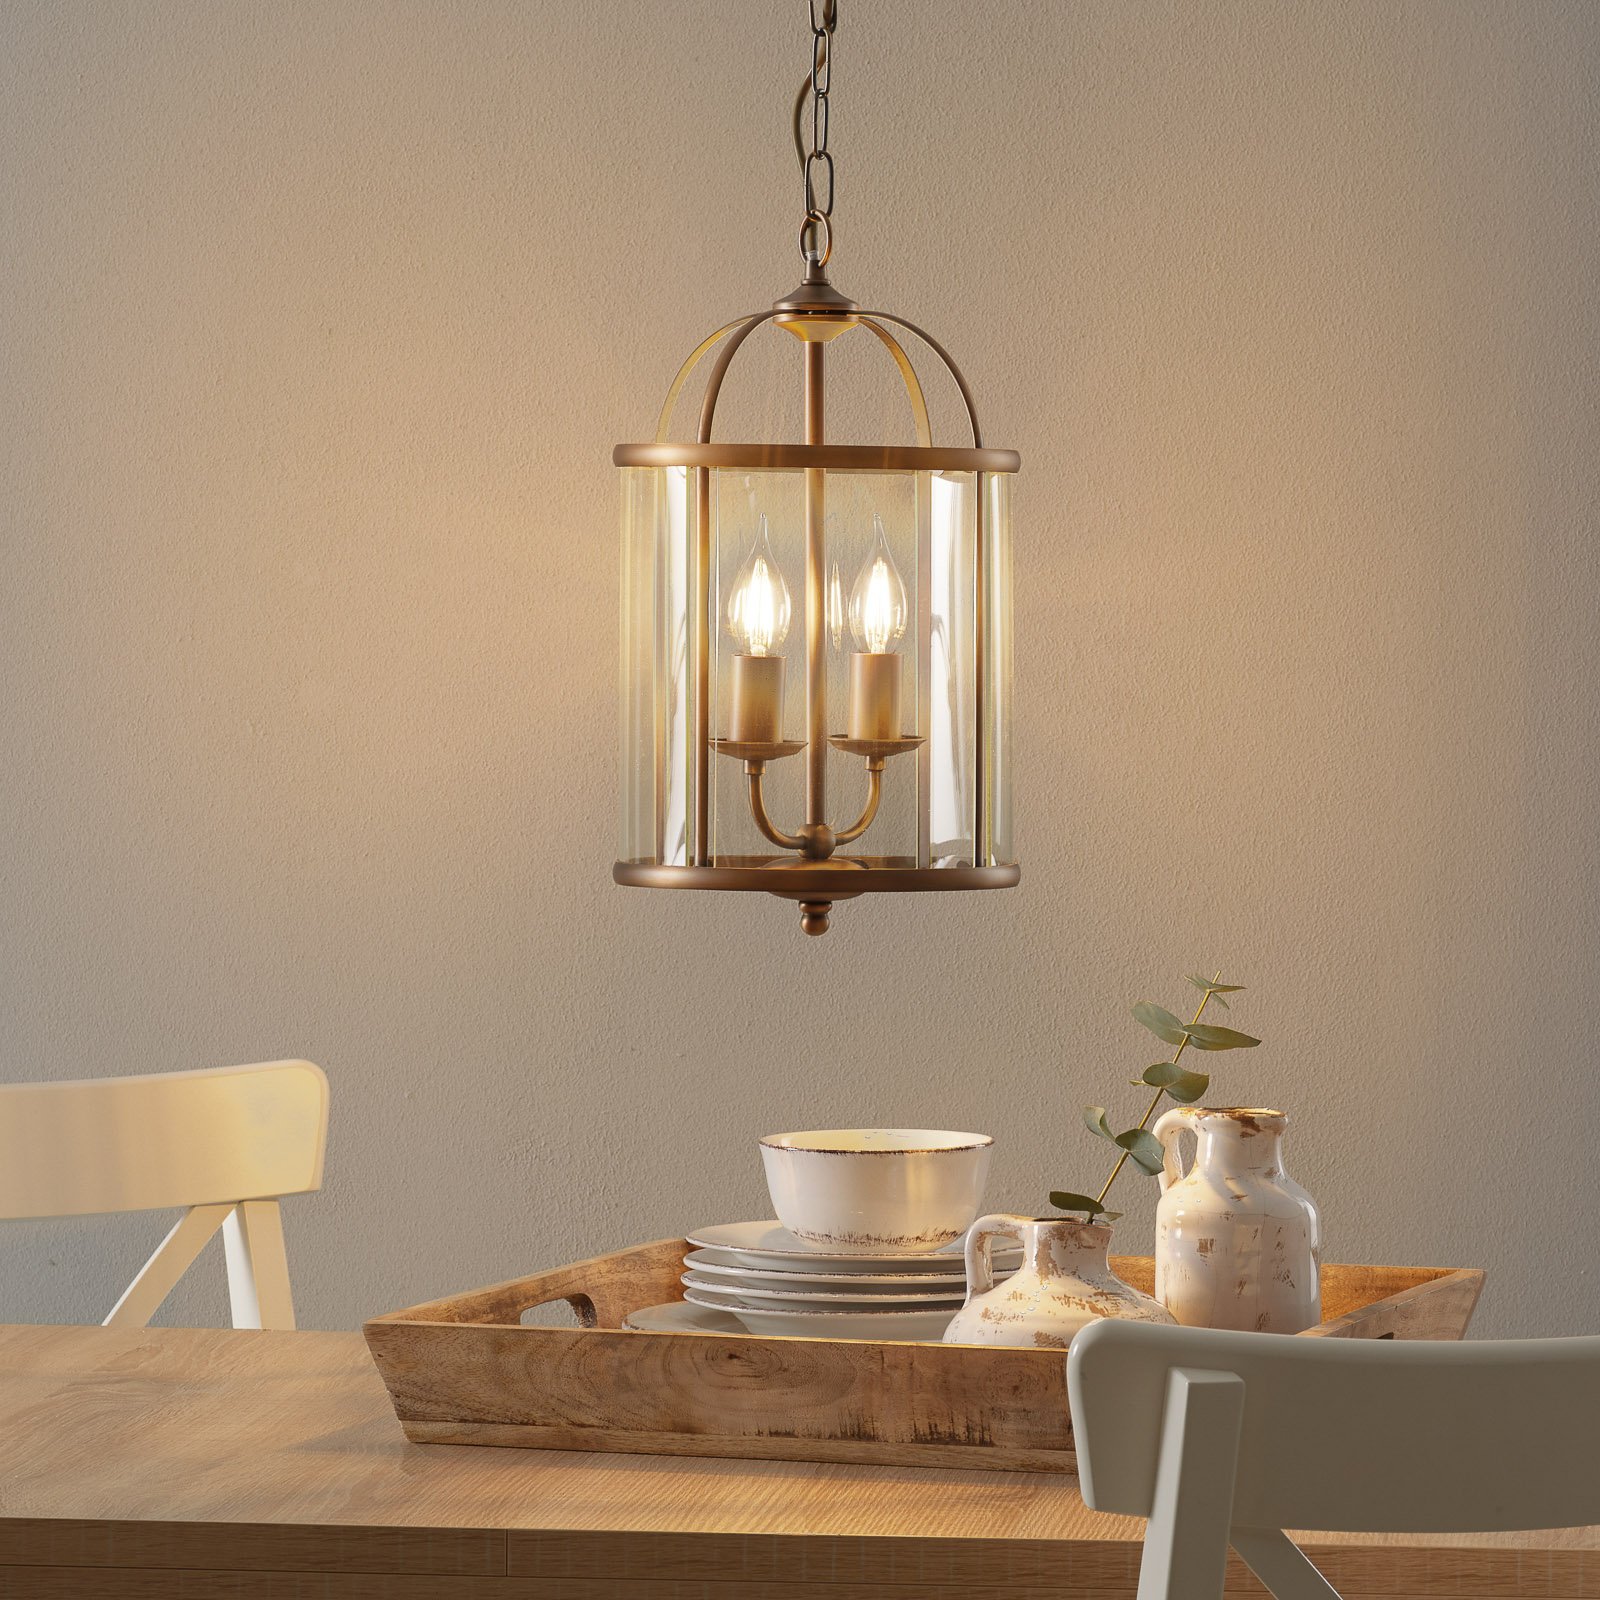 Decorative Pimpernel hanging light, 23 cm